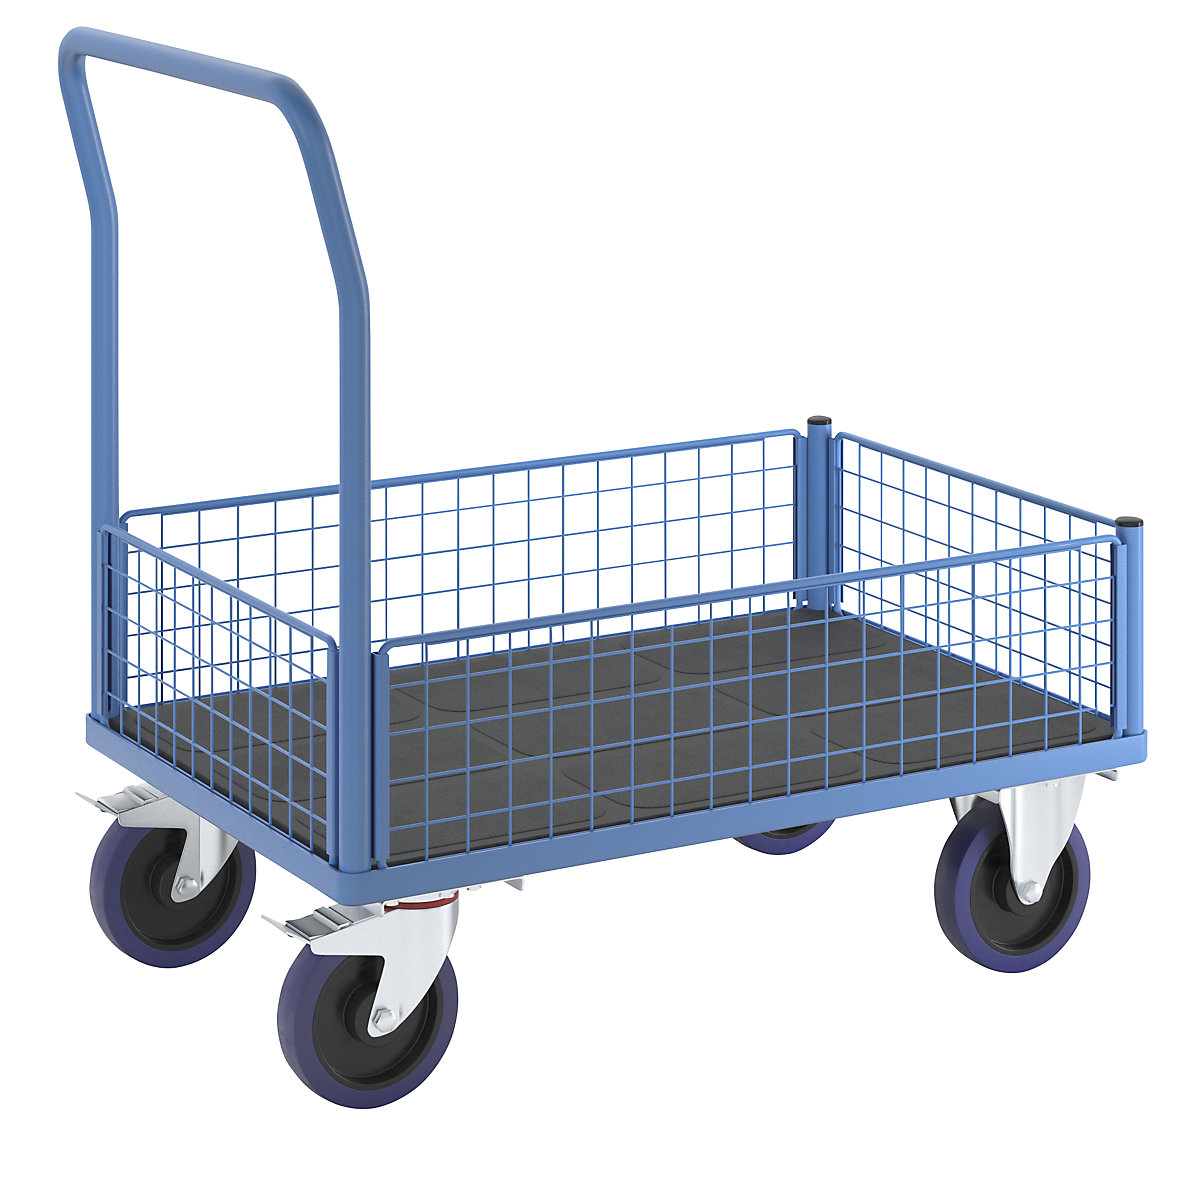 Plošinový vozík s mřížkami v poloviční výšce – eurokraft pro